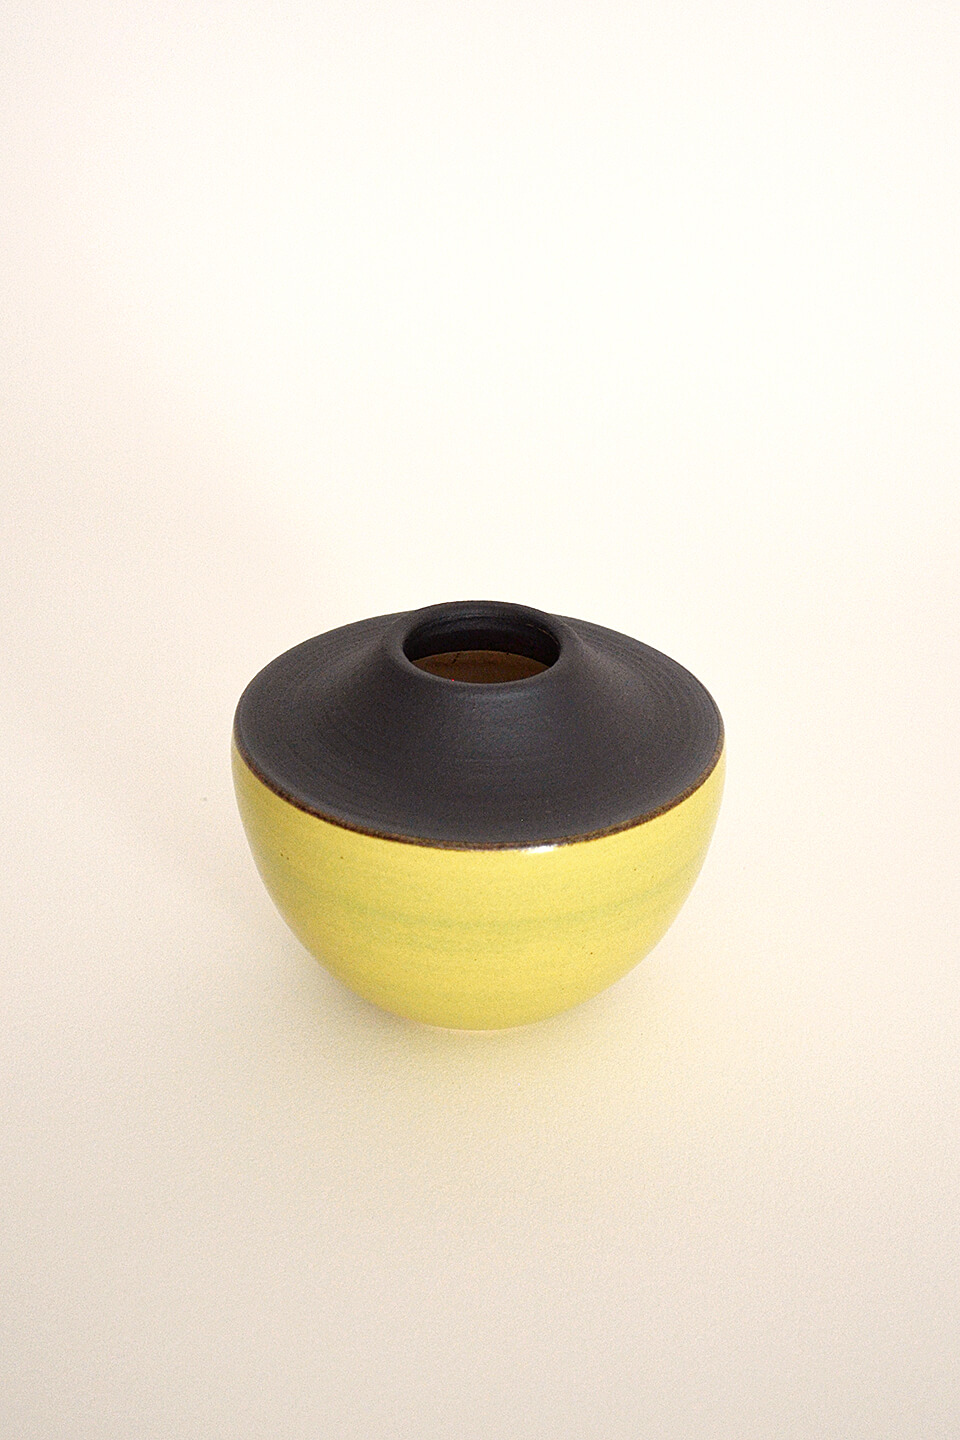 Black + Satin Yellow Green Ceramic Vase No. 643